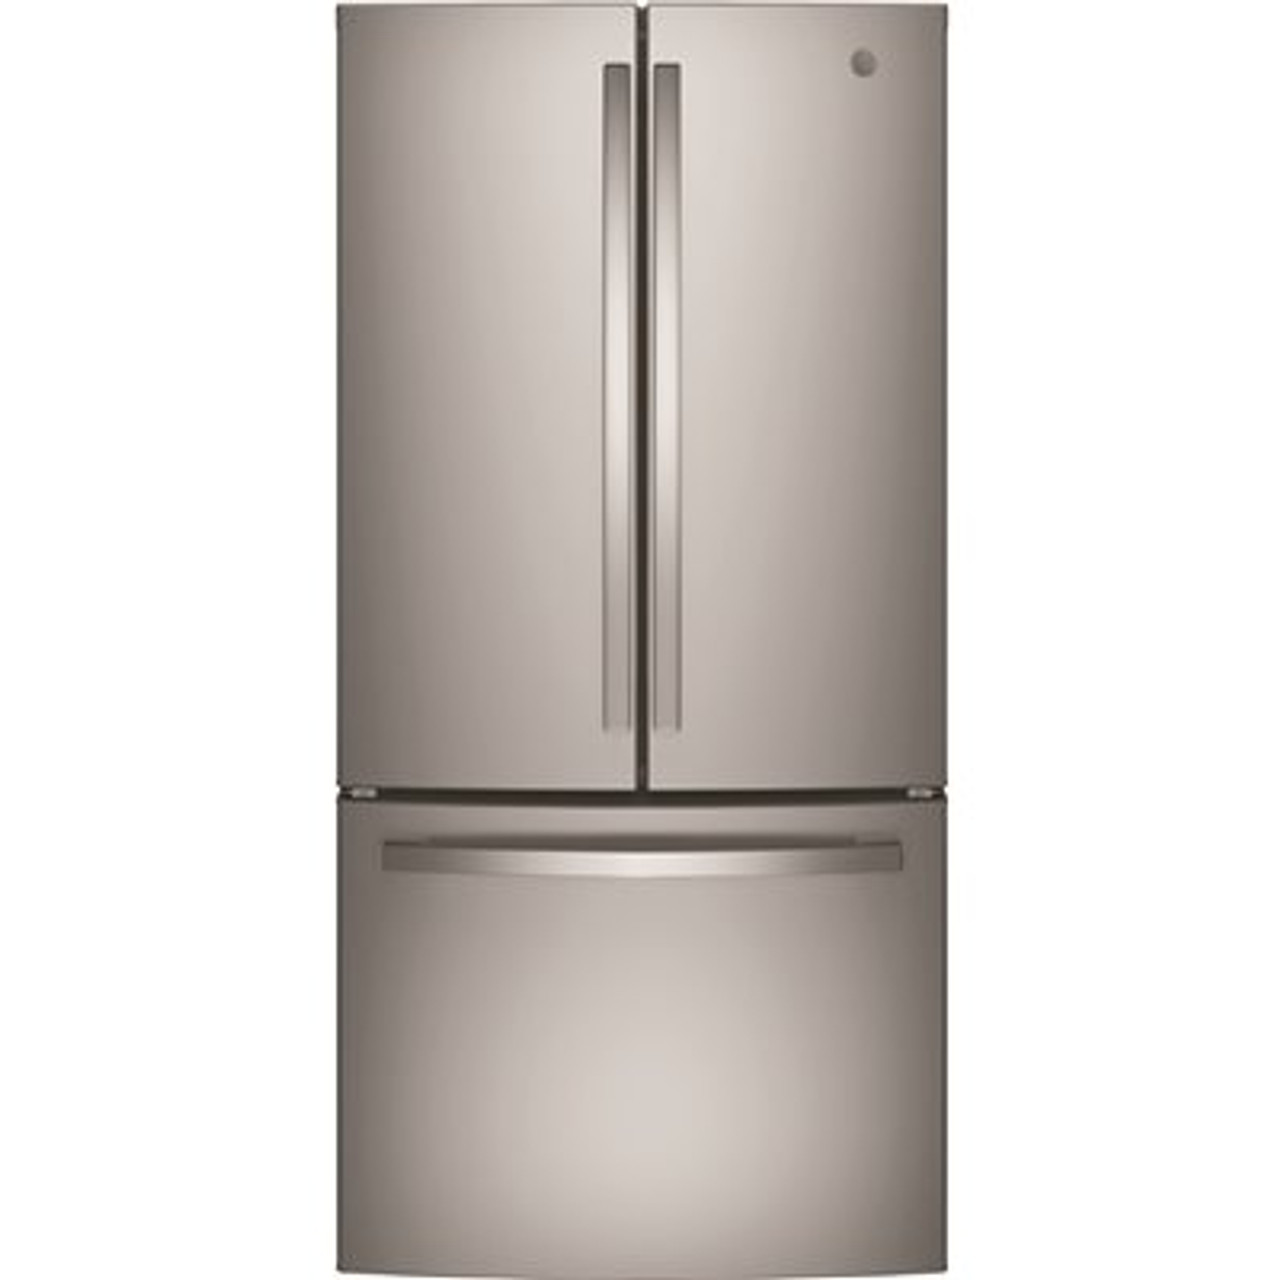 GE 18.6 Cu. Ft. French Door Refrigerator In Fingerprint Resistant Stainless Steel, Counter Depth